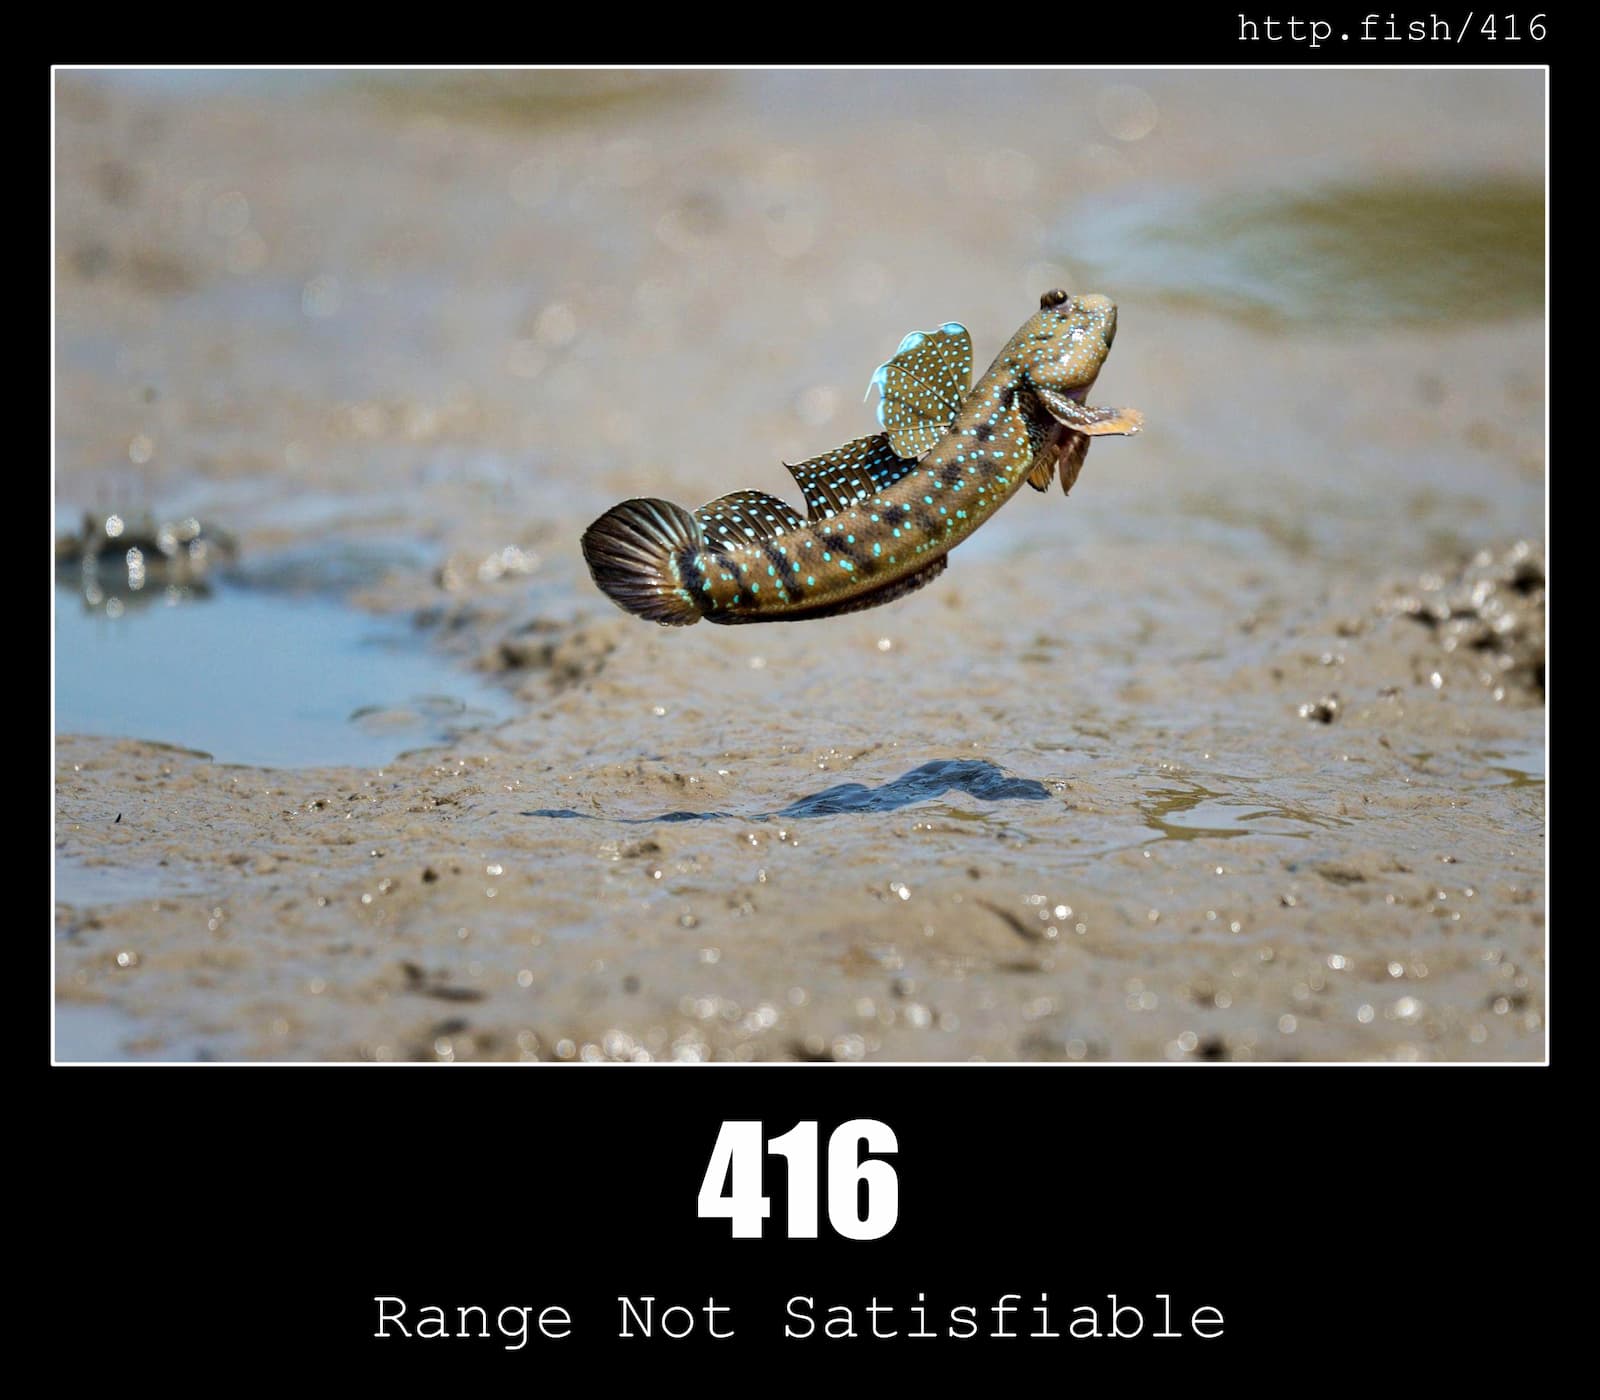 HTTP Status Code 416 Range Not Satisfiable & Fish